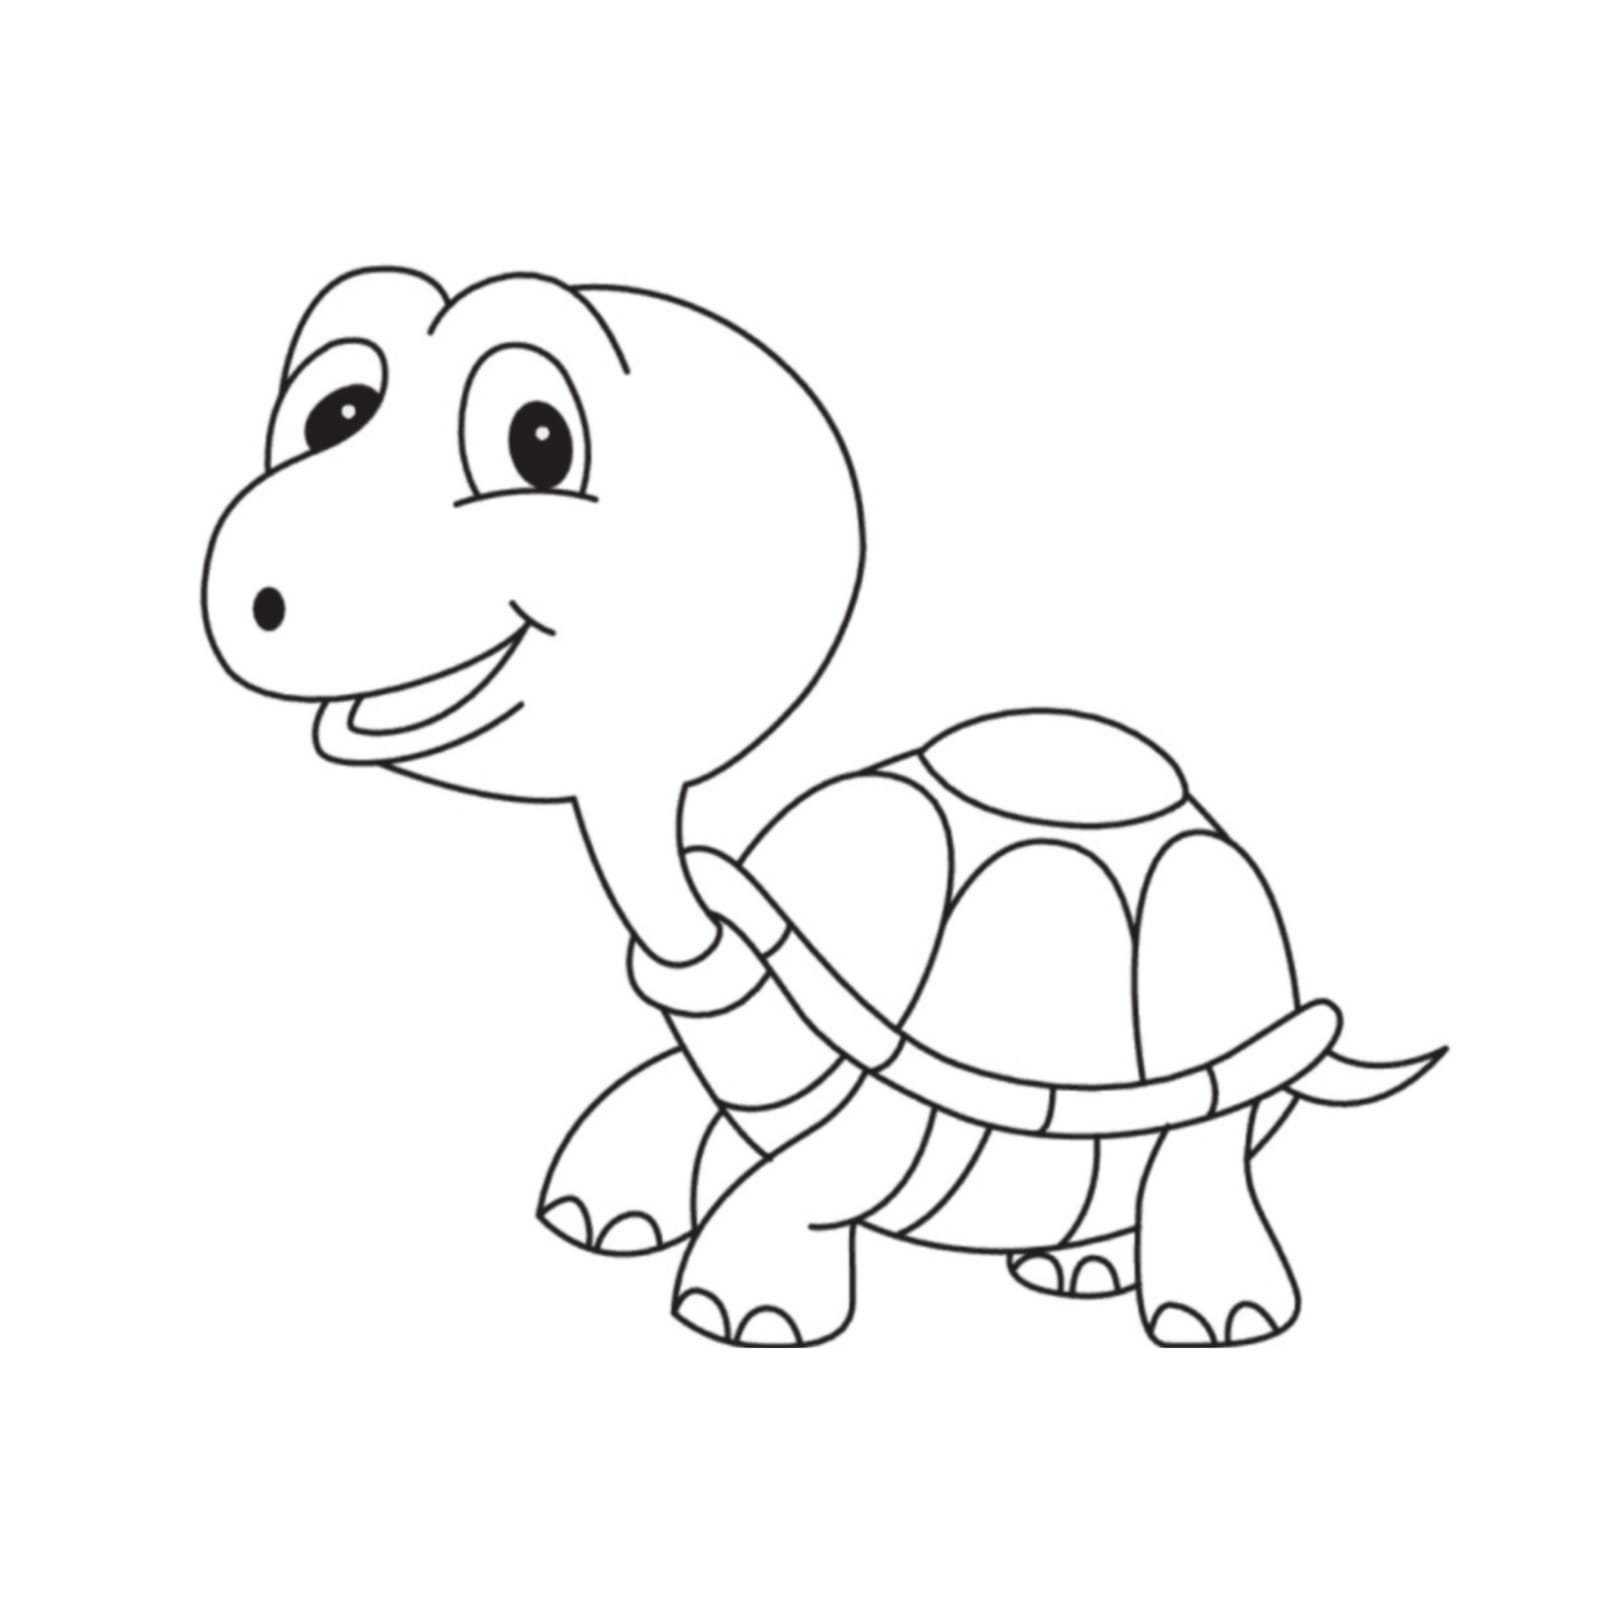 66,133 Turtle Cartoon Images, Stock Photos, 3D objects, & Vectors |  Shutterstock